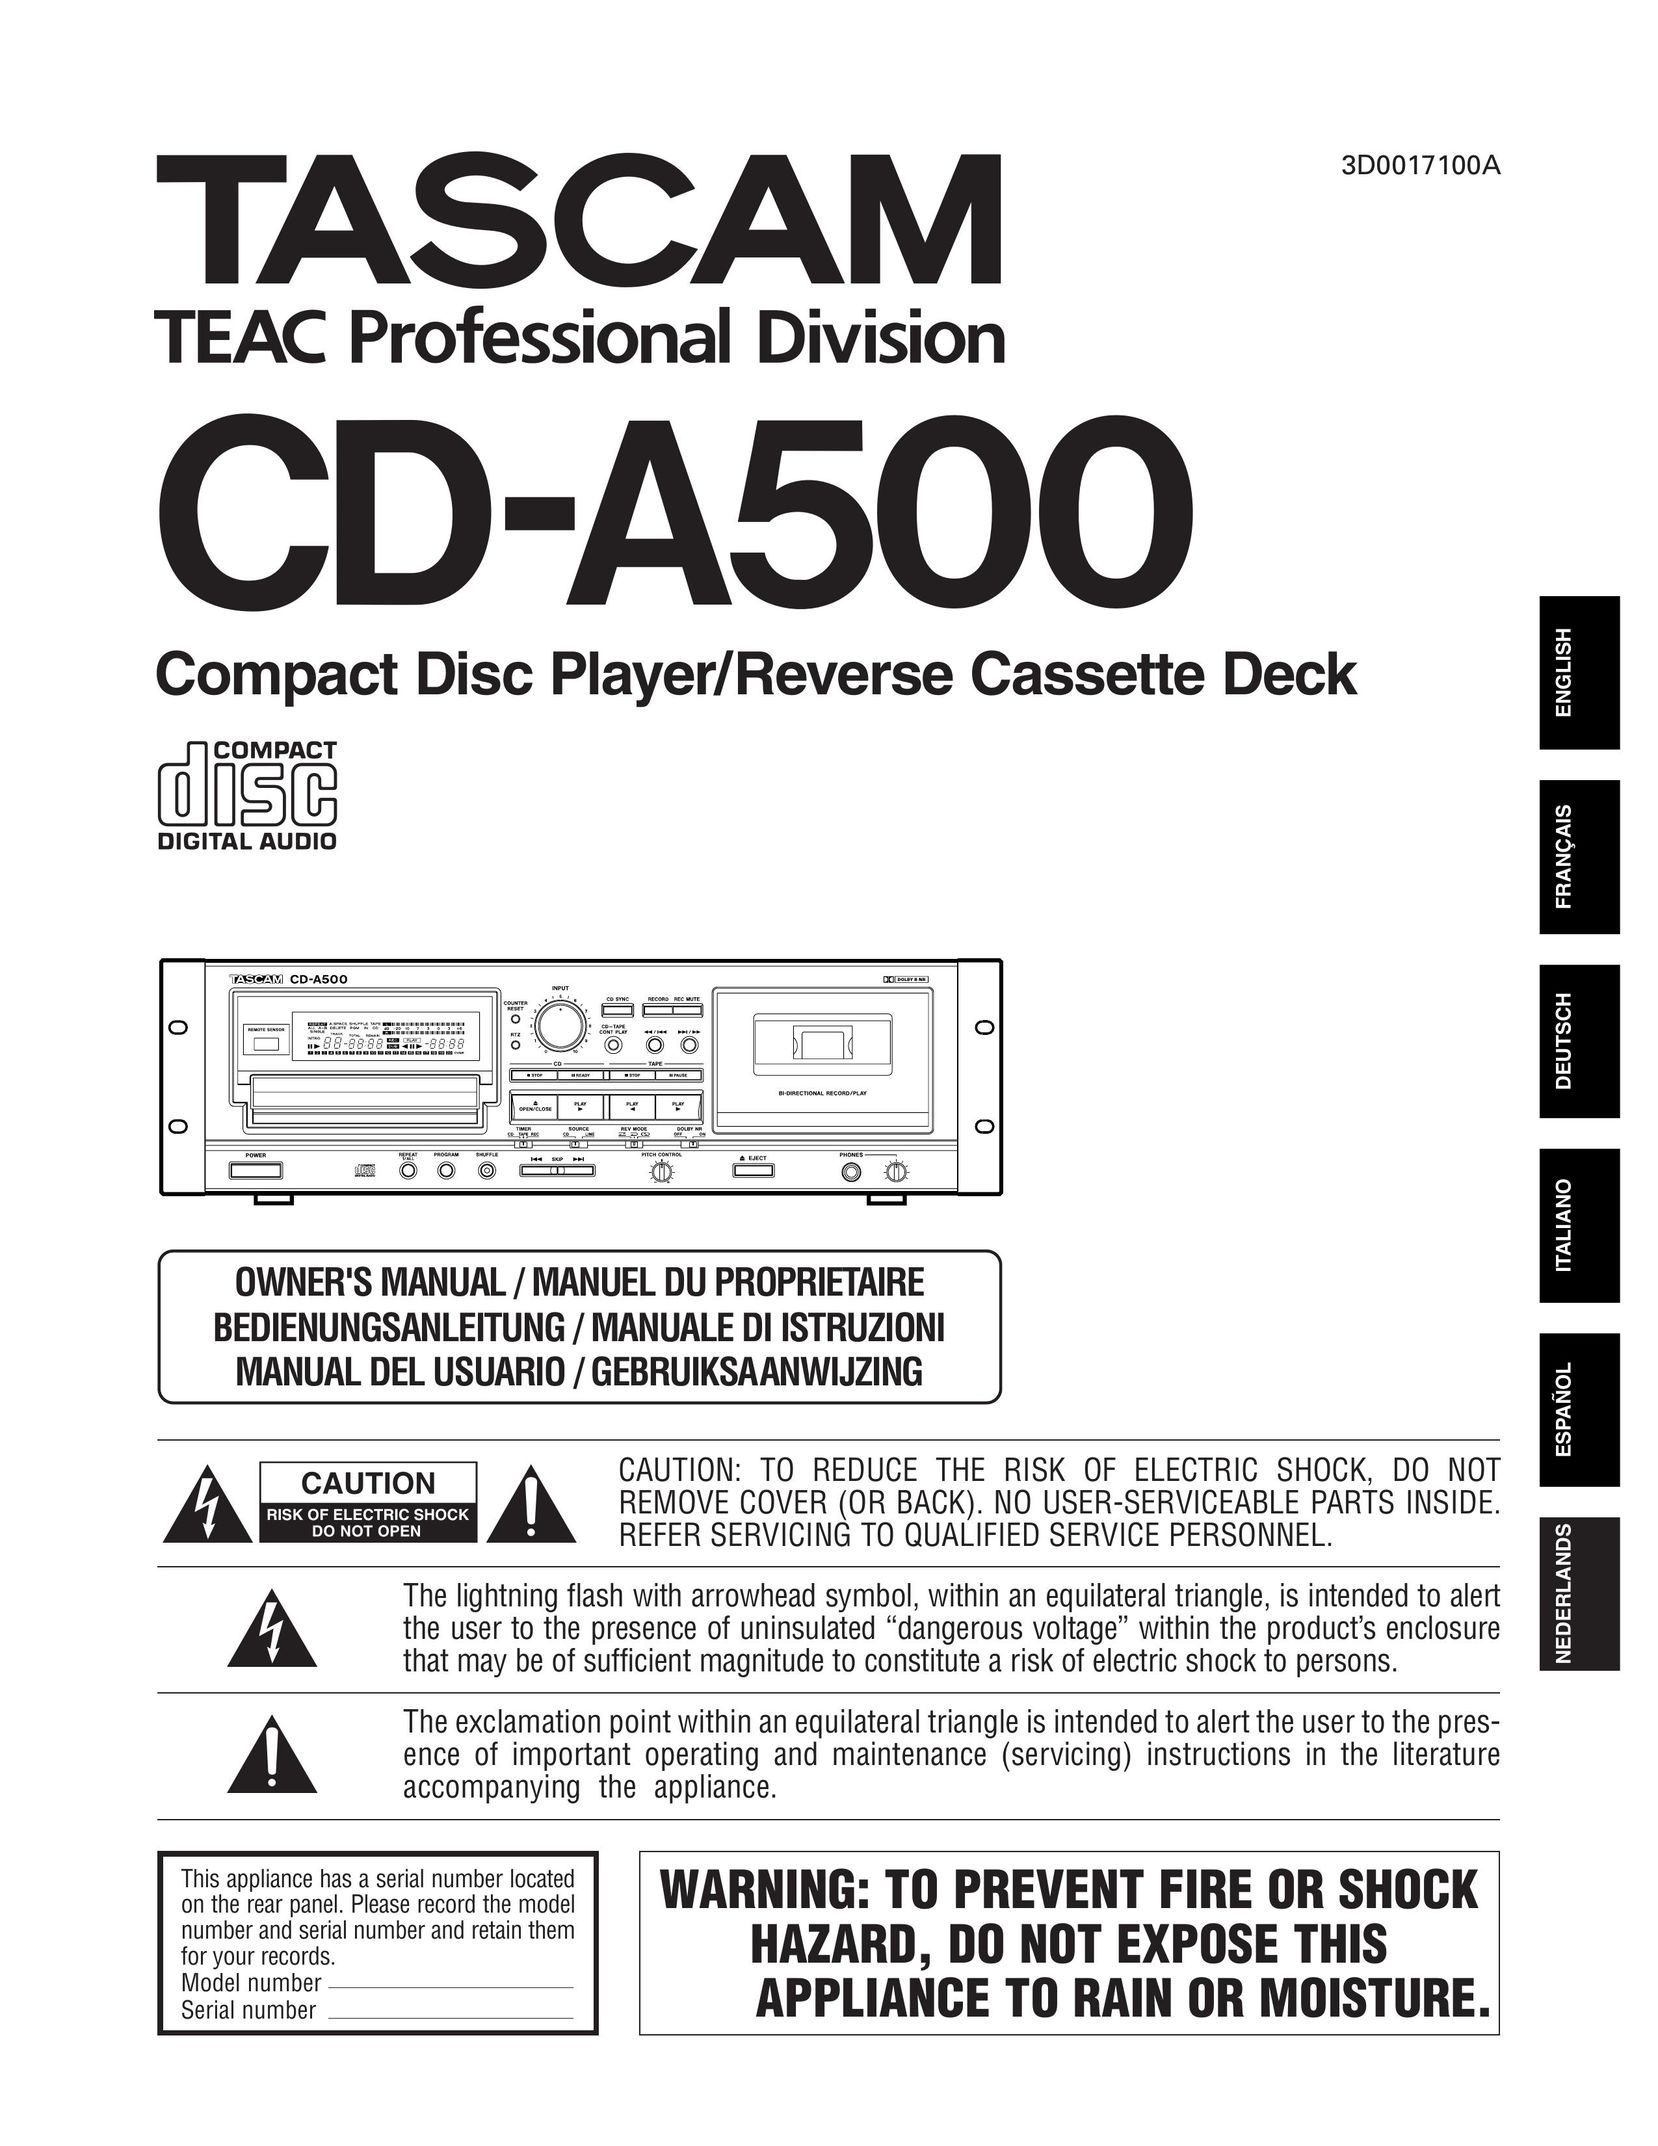 Tascam CD-A500 CD Player User Manual